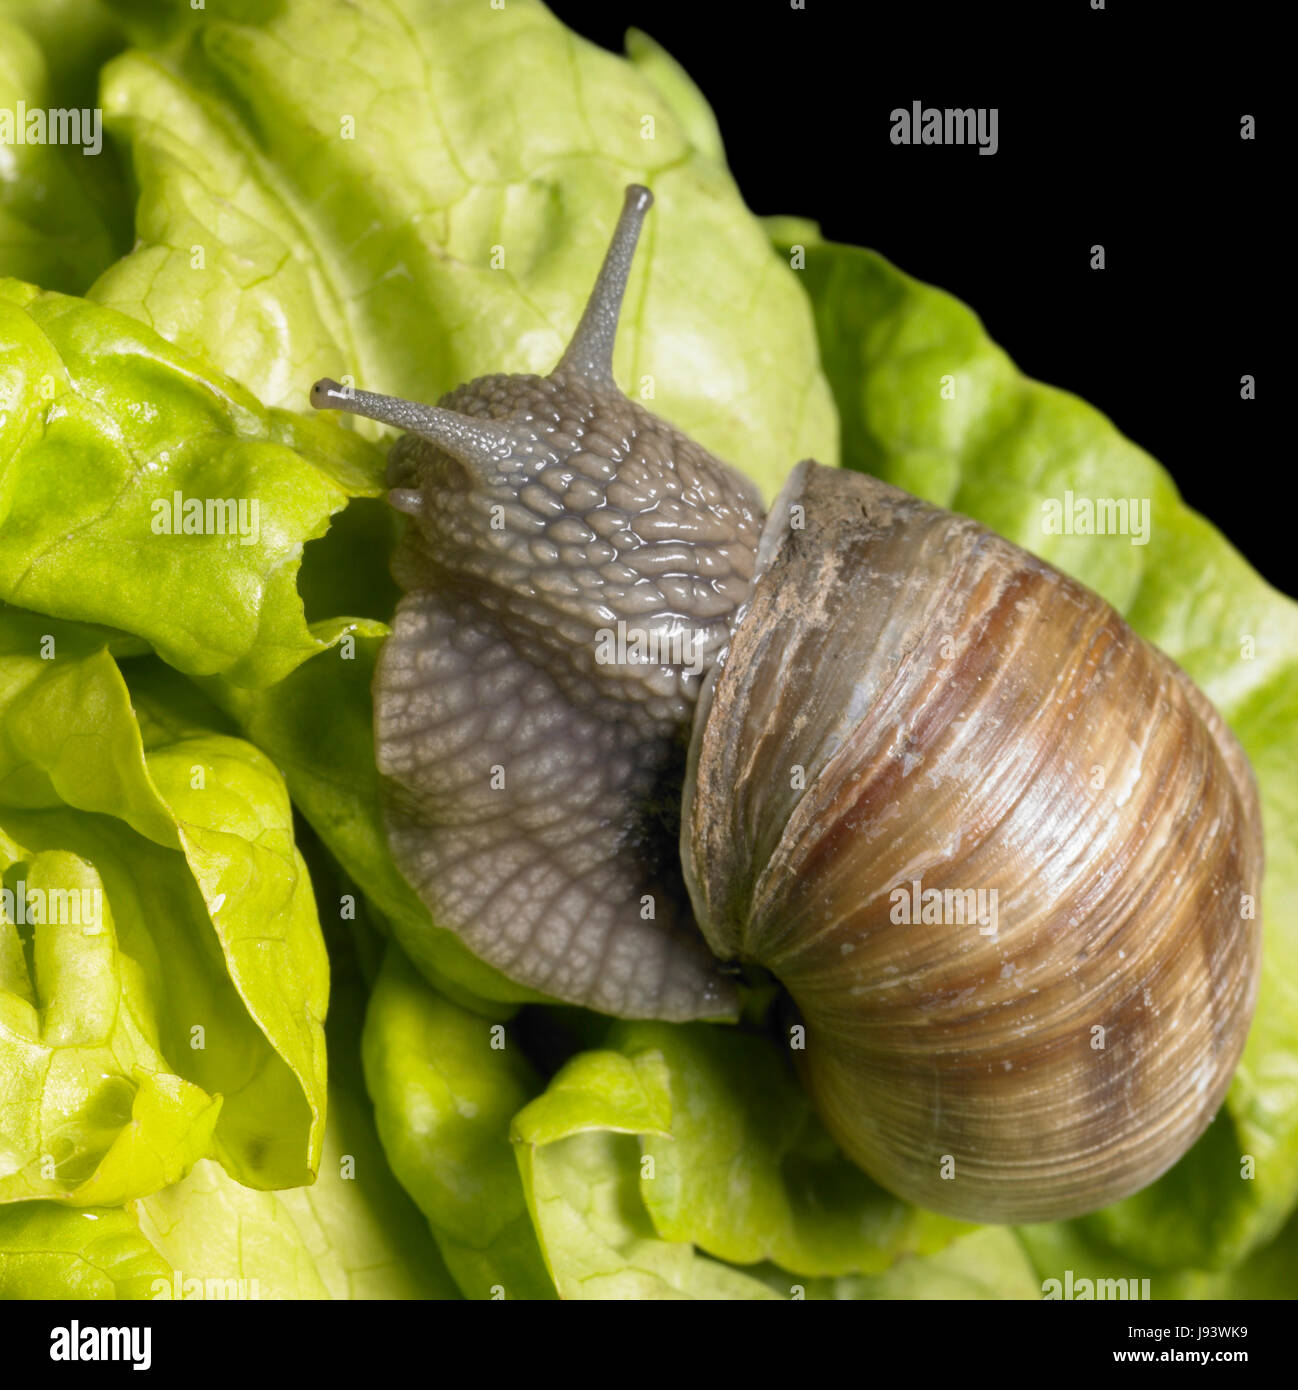 leaf, snail, edible snail, terrestrial, salad, motion, postponement, moving, Stock Photo